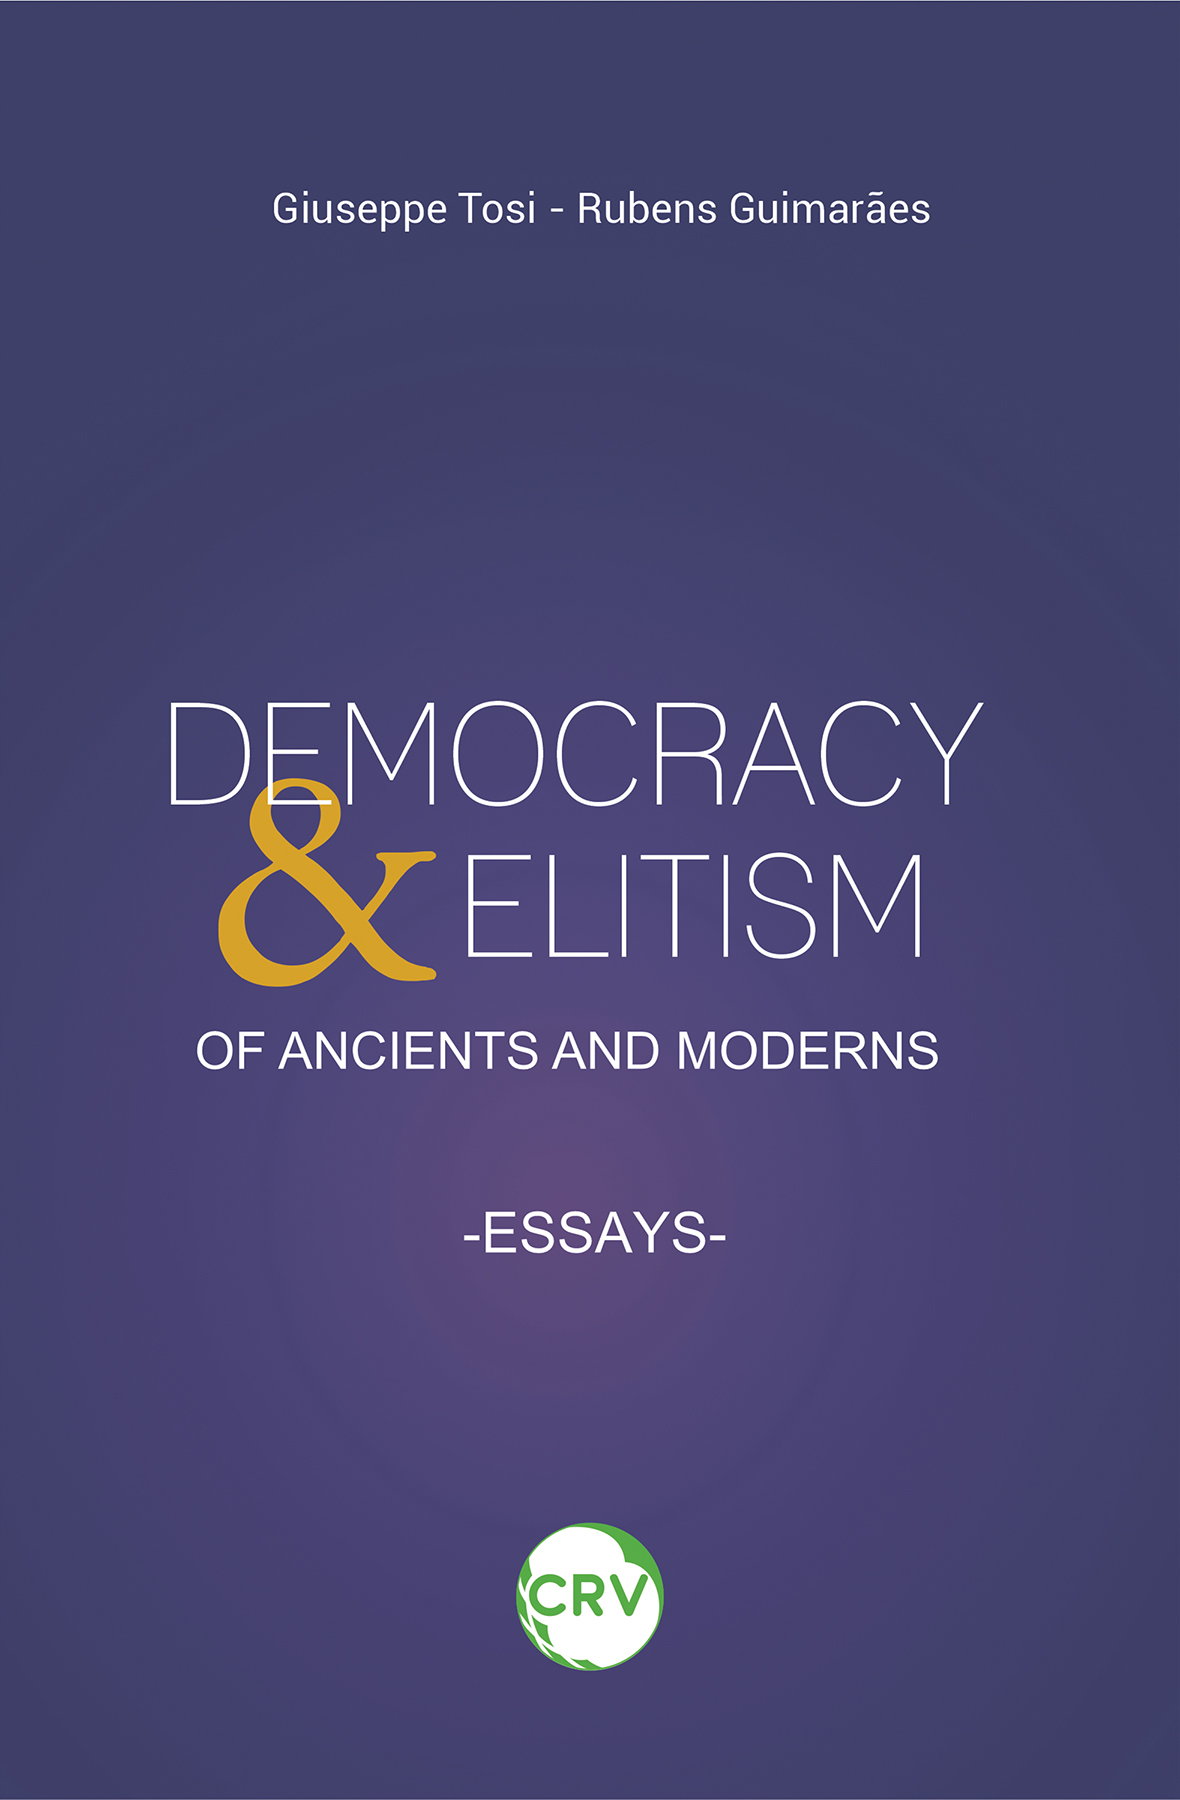 Capa do livro: Democracy & elitism of ancients and moderns: Essays